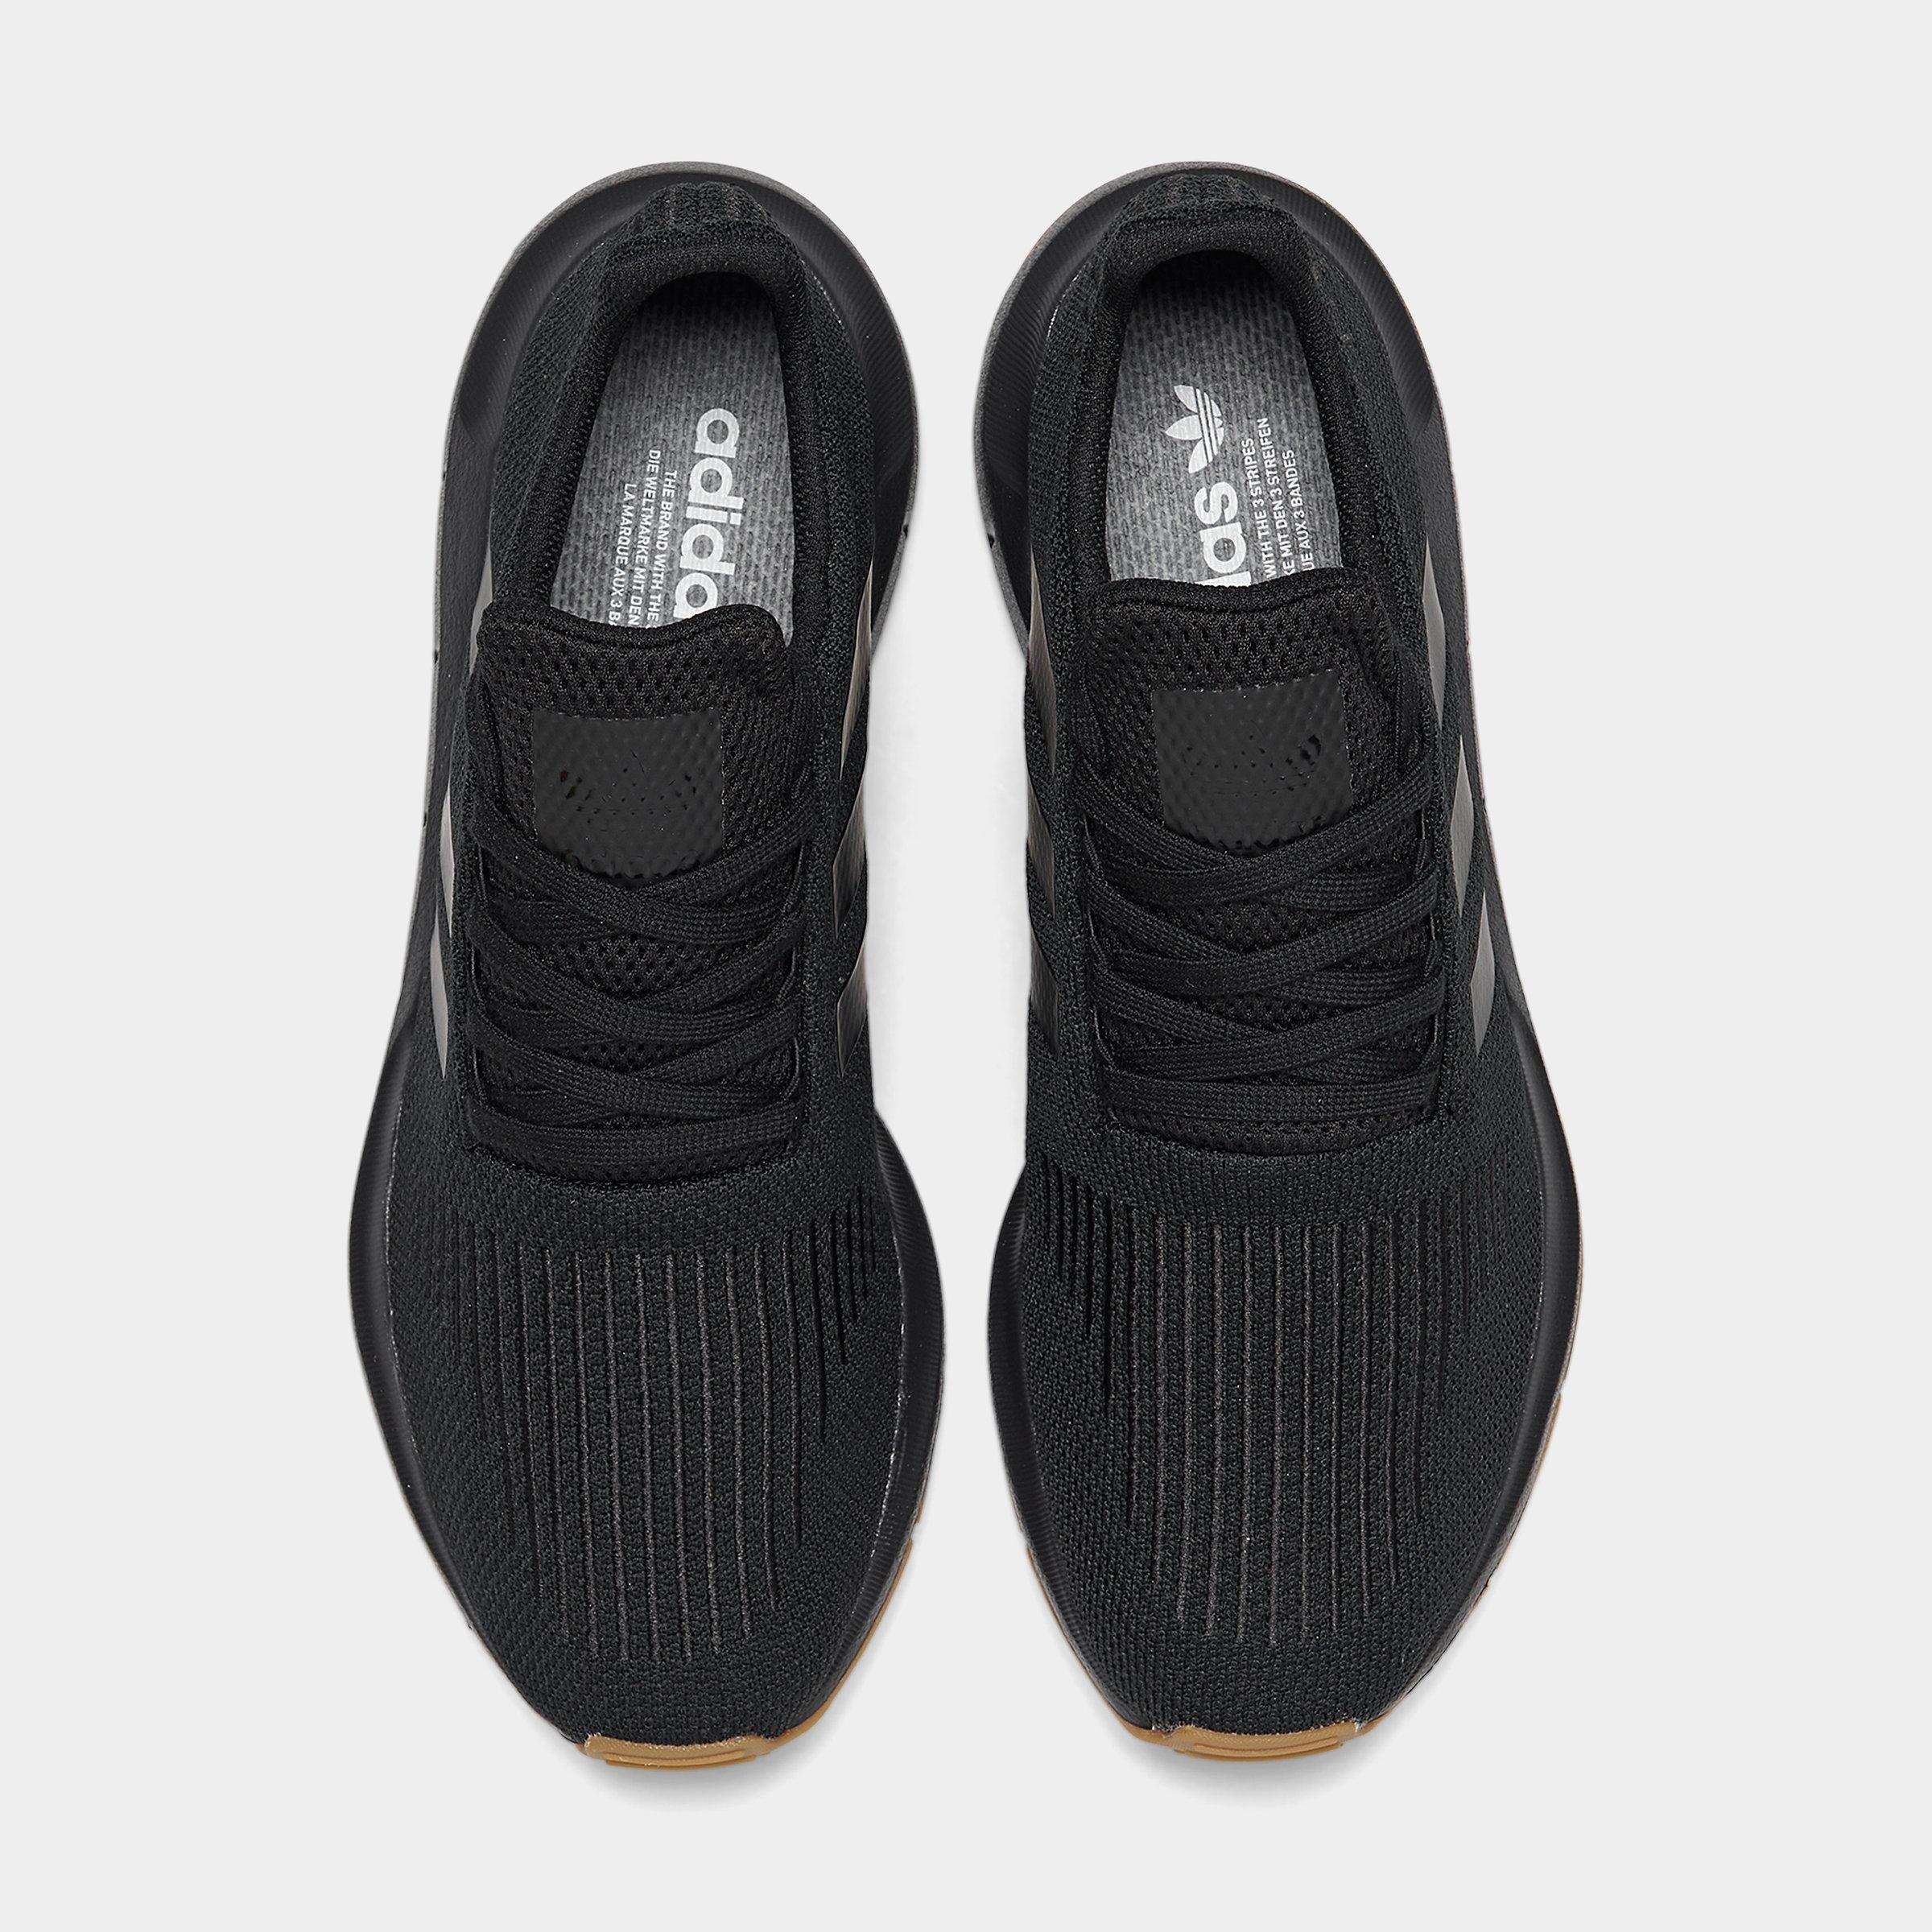 adidas men's swift run shoes